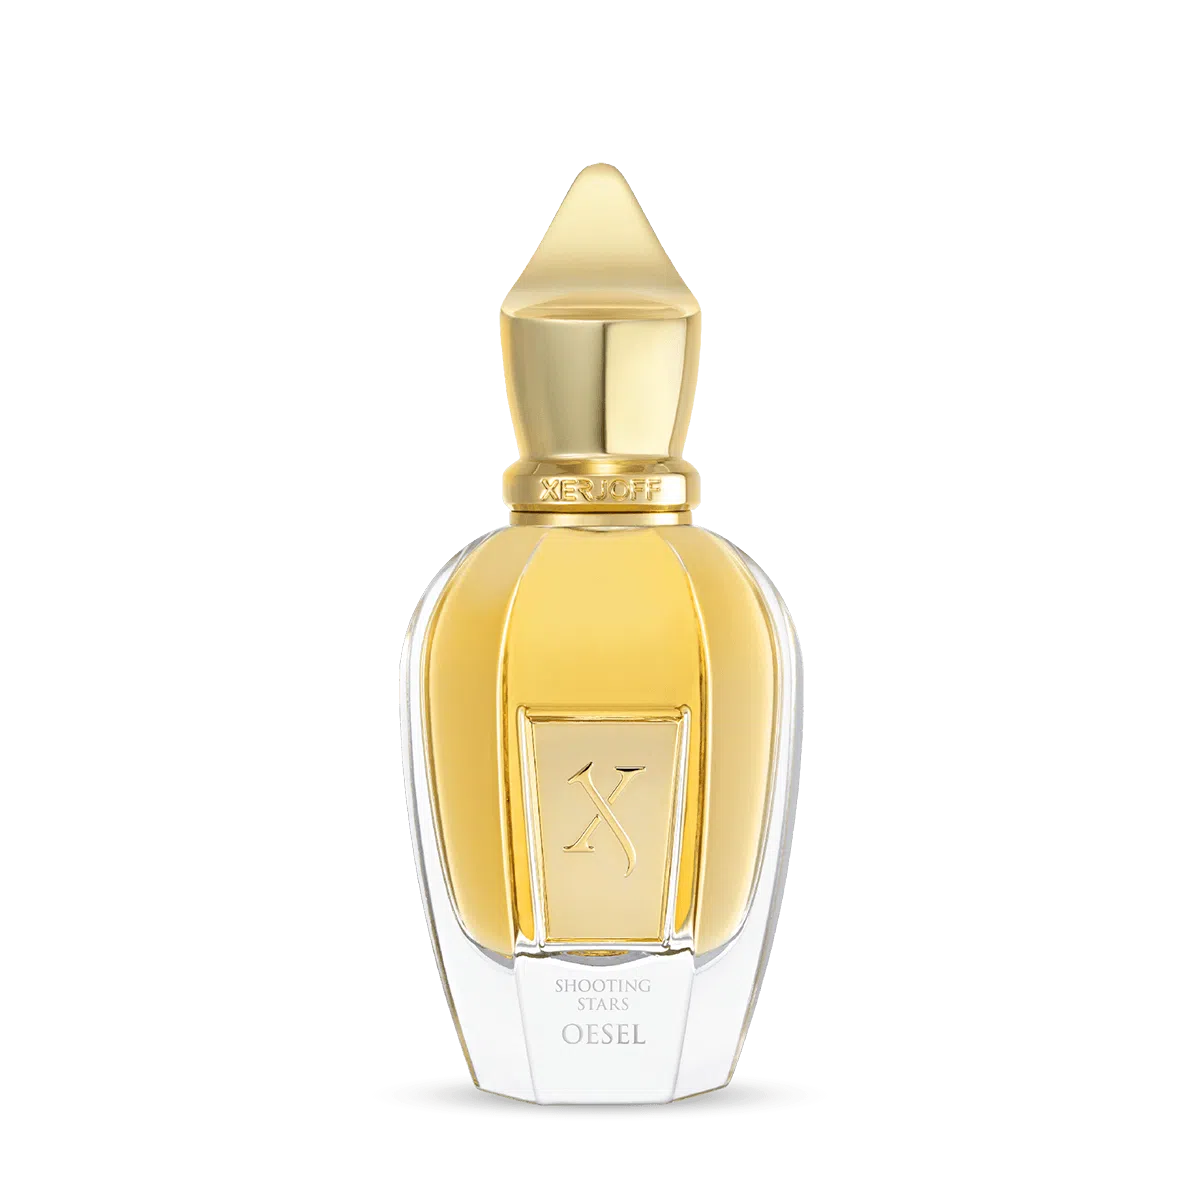 Perfume Xerjoff Shooting Stars Oesel Parfum (U) / 50 ml - 8033488151959- 2 - Prive Perfumes Honduras